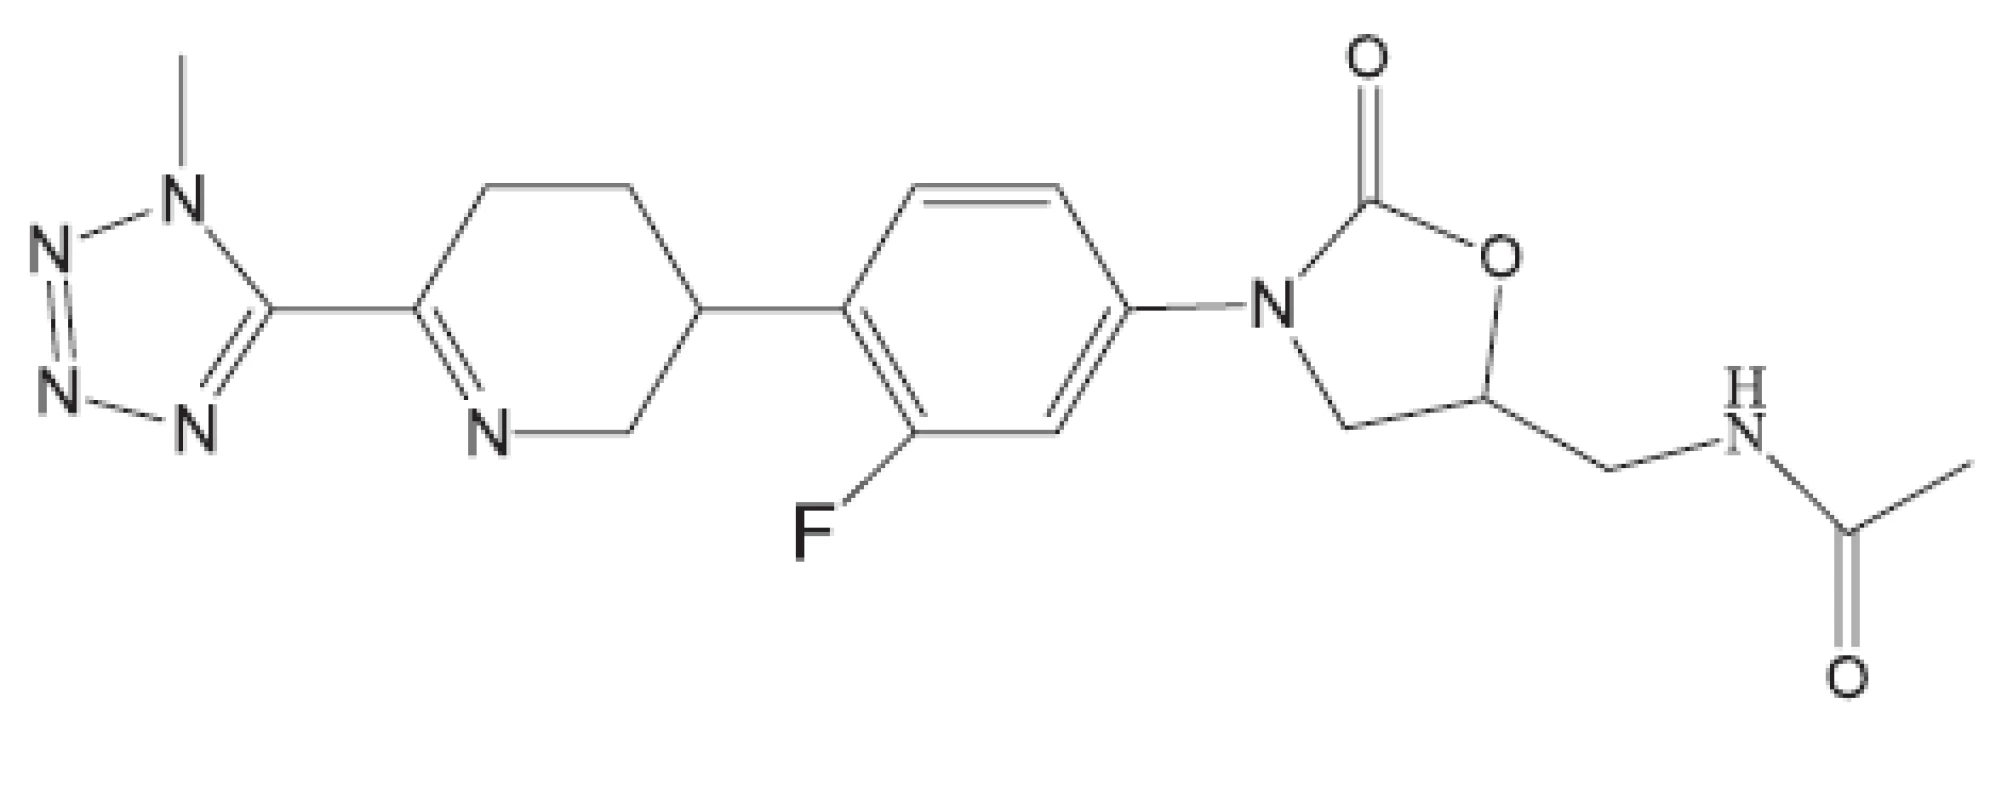 DA 7867 – inhibitor proteosyntézy